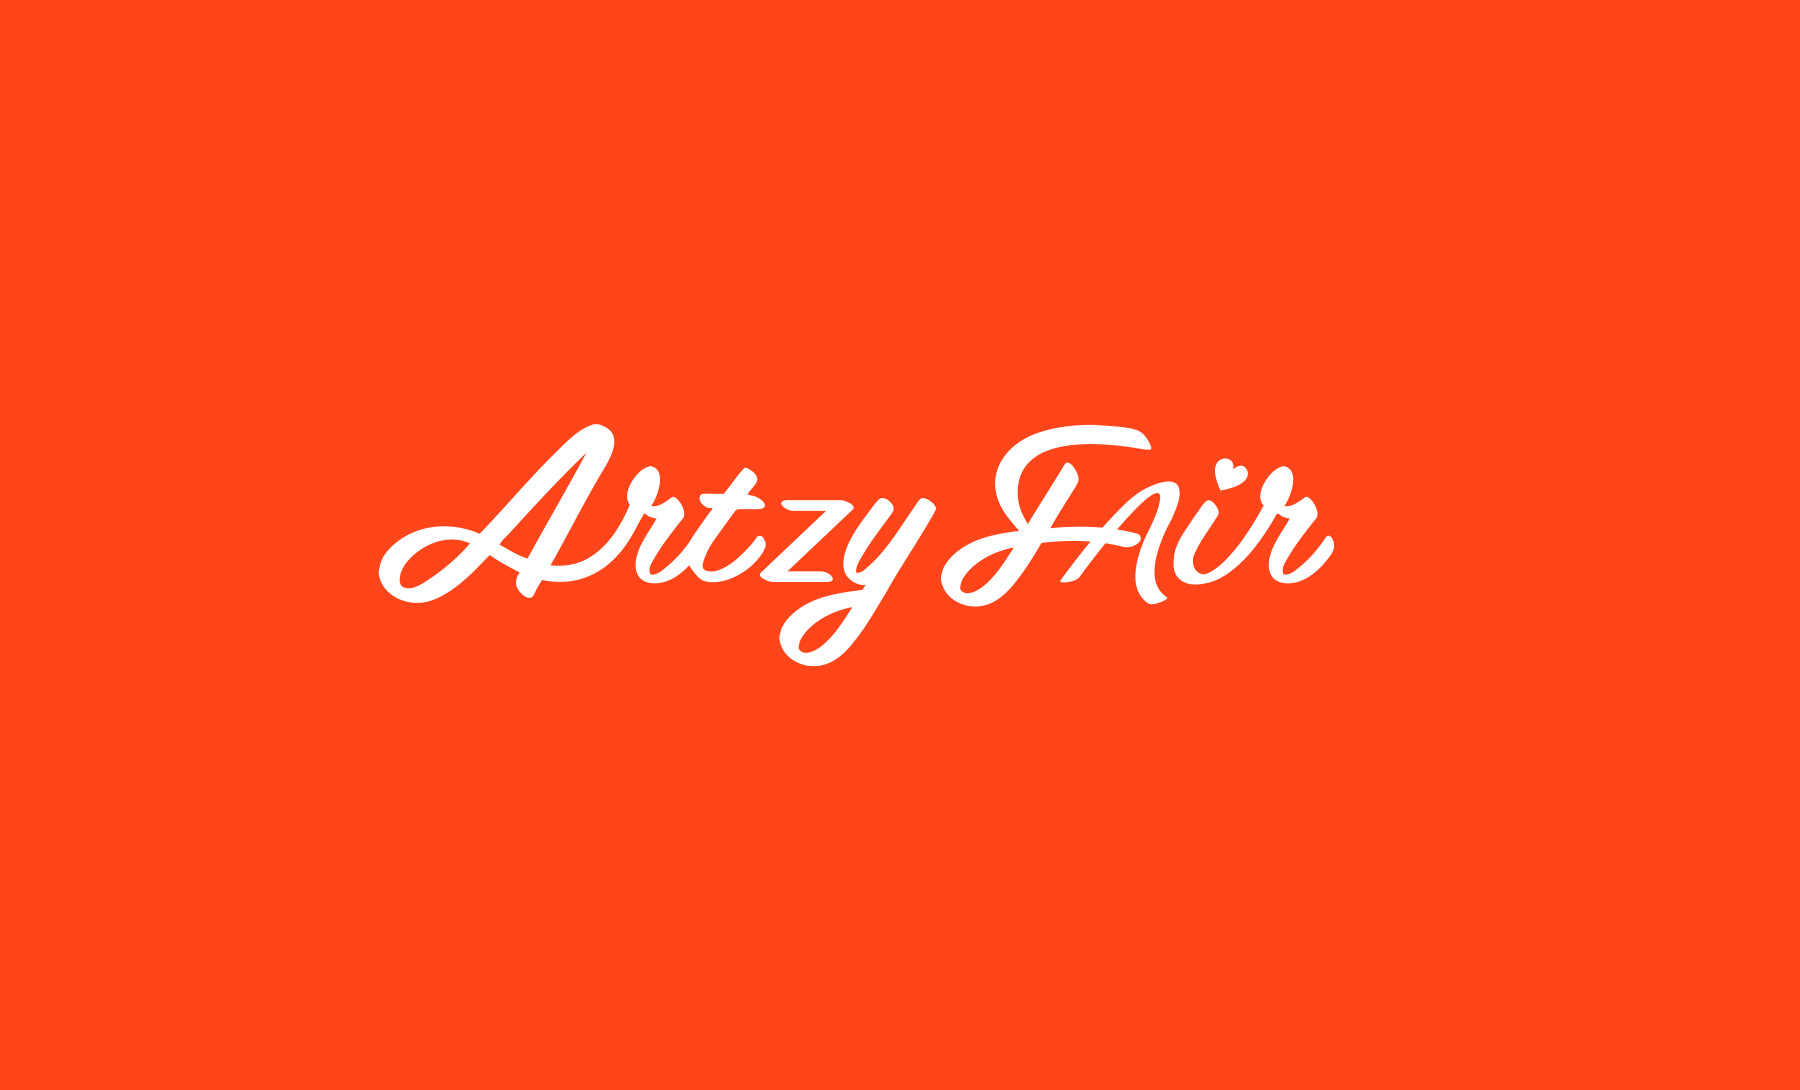 Artzy Fair script logo design